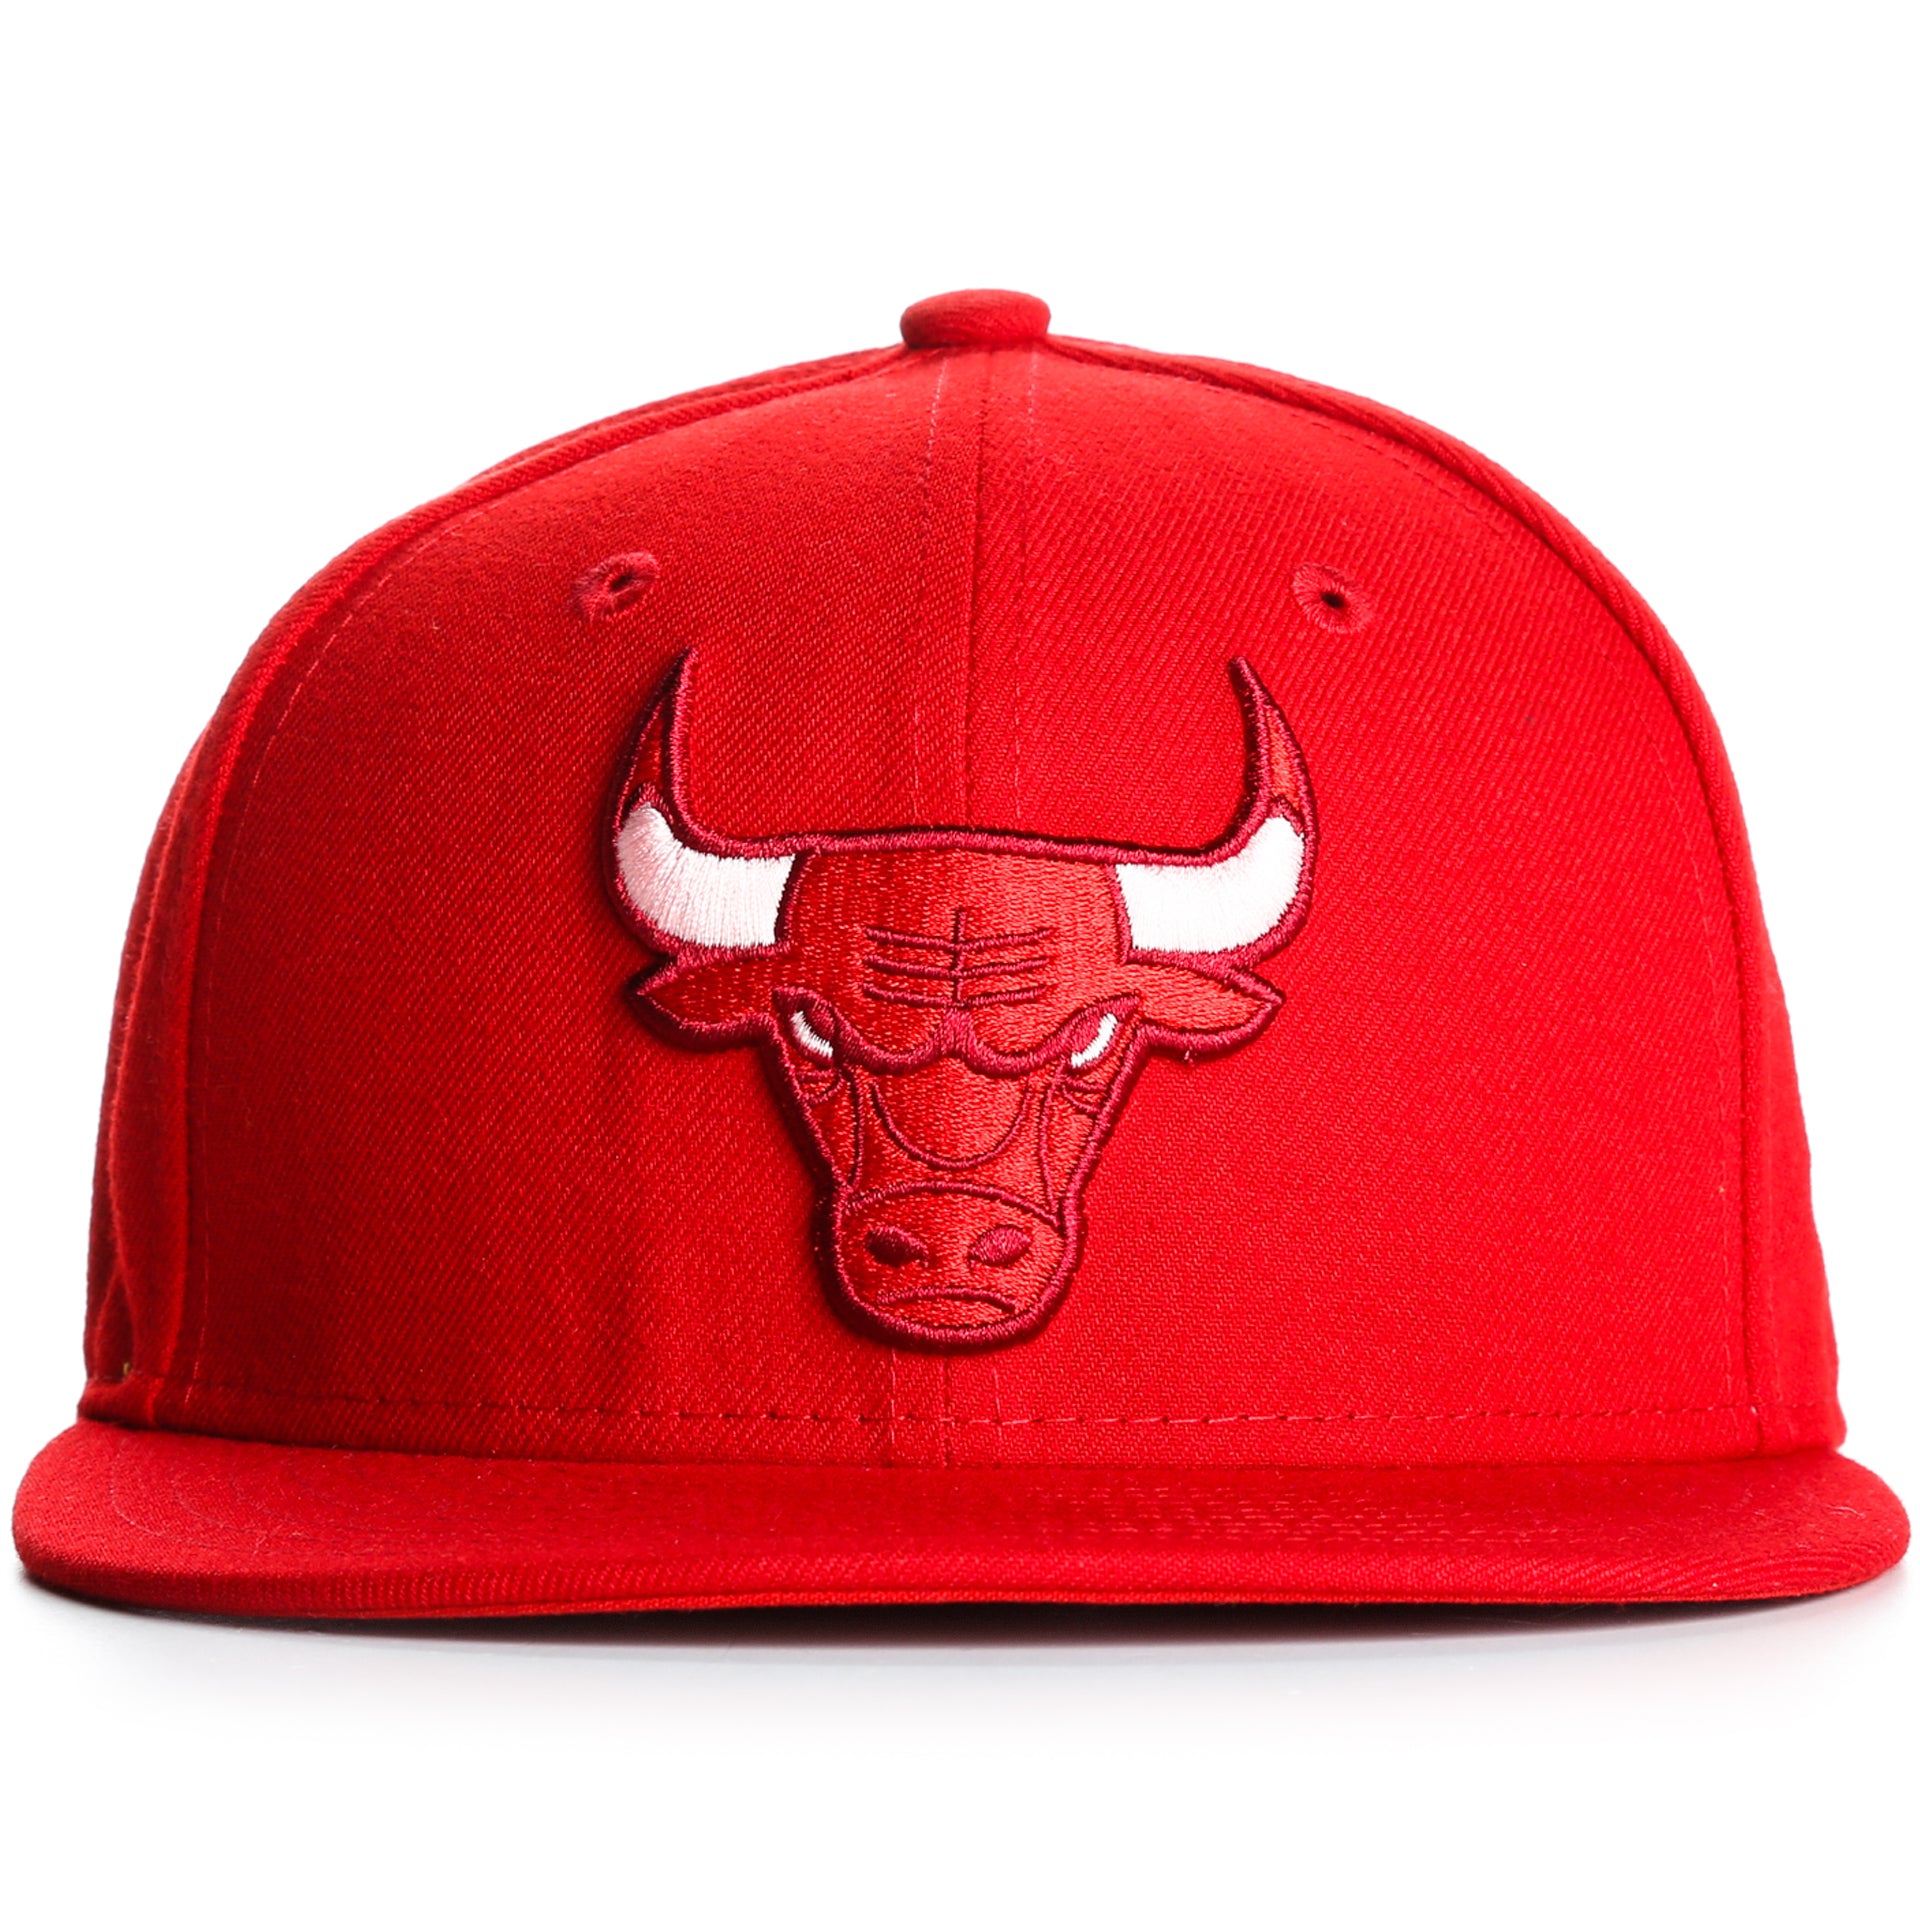 Chicago Bulls (Red) New Era 9FIFTY Snapback